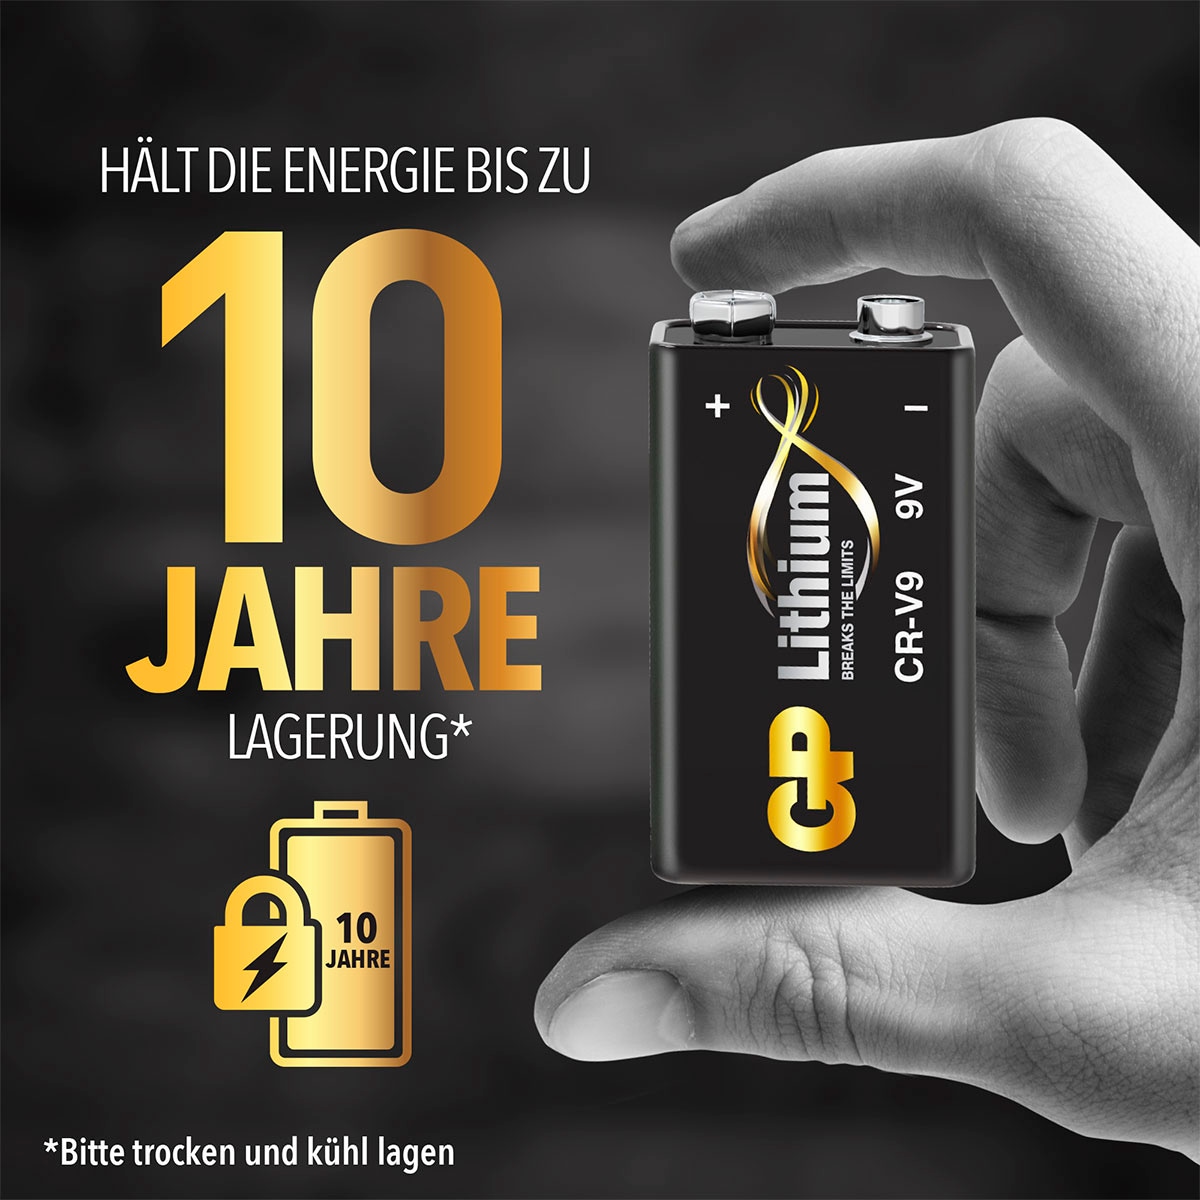 GP Batteries Batterie »CR-V9«, U9VL, 9 V, (1 St.), ideal für Rauchmelder